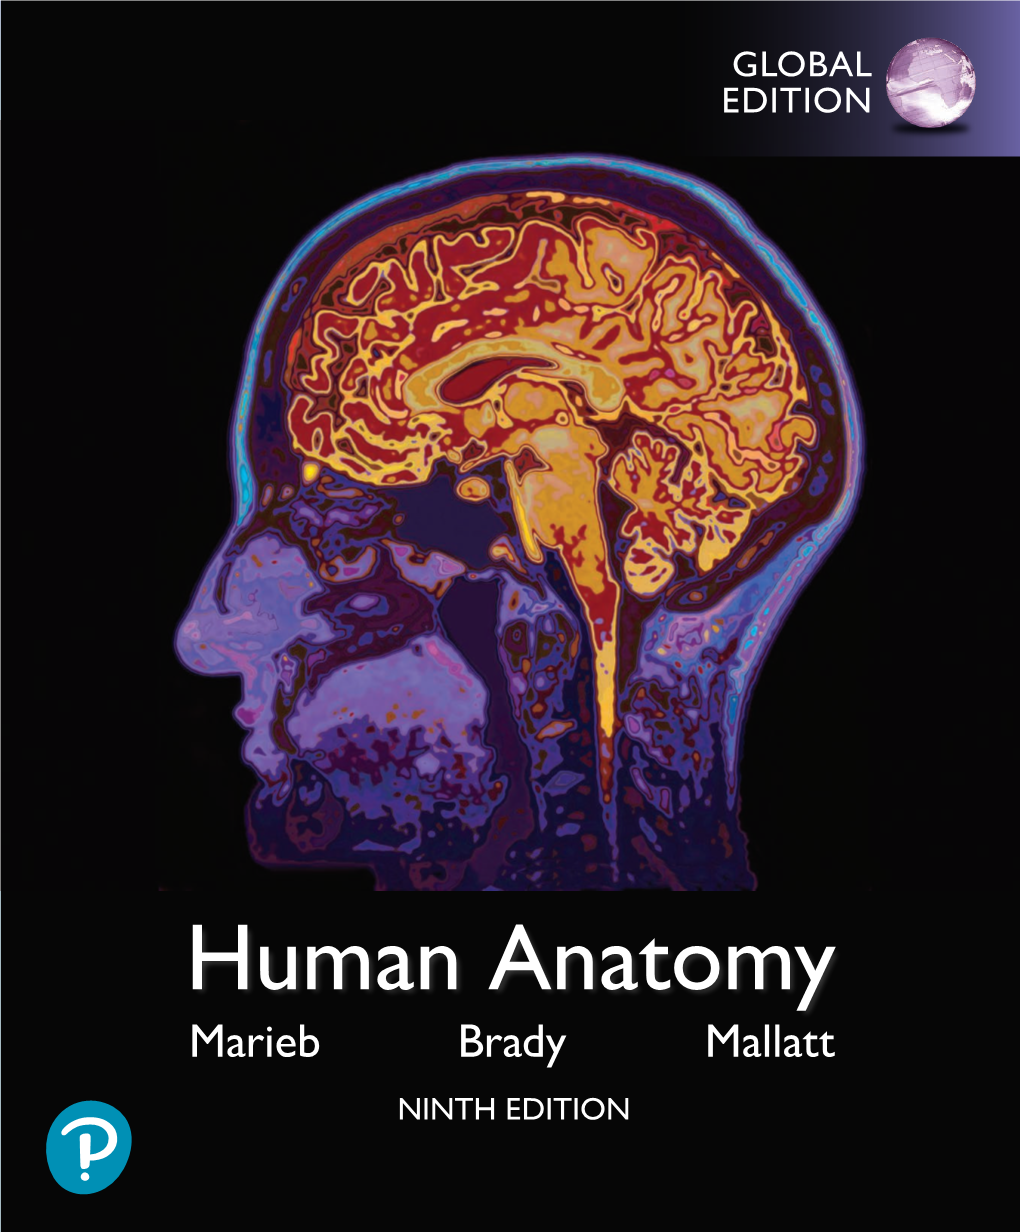 Human Anatomy Marieb Brady Mallatt NINTH EDITION a Functional Approach to Human Anatomy Available in a Multifunctional Etext